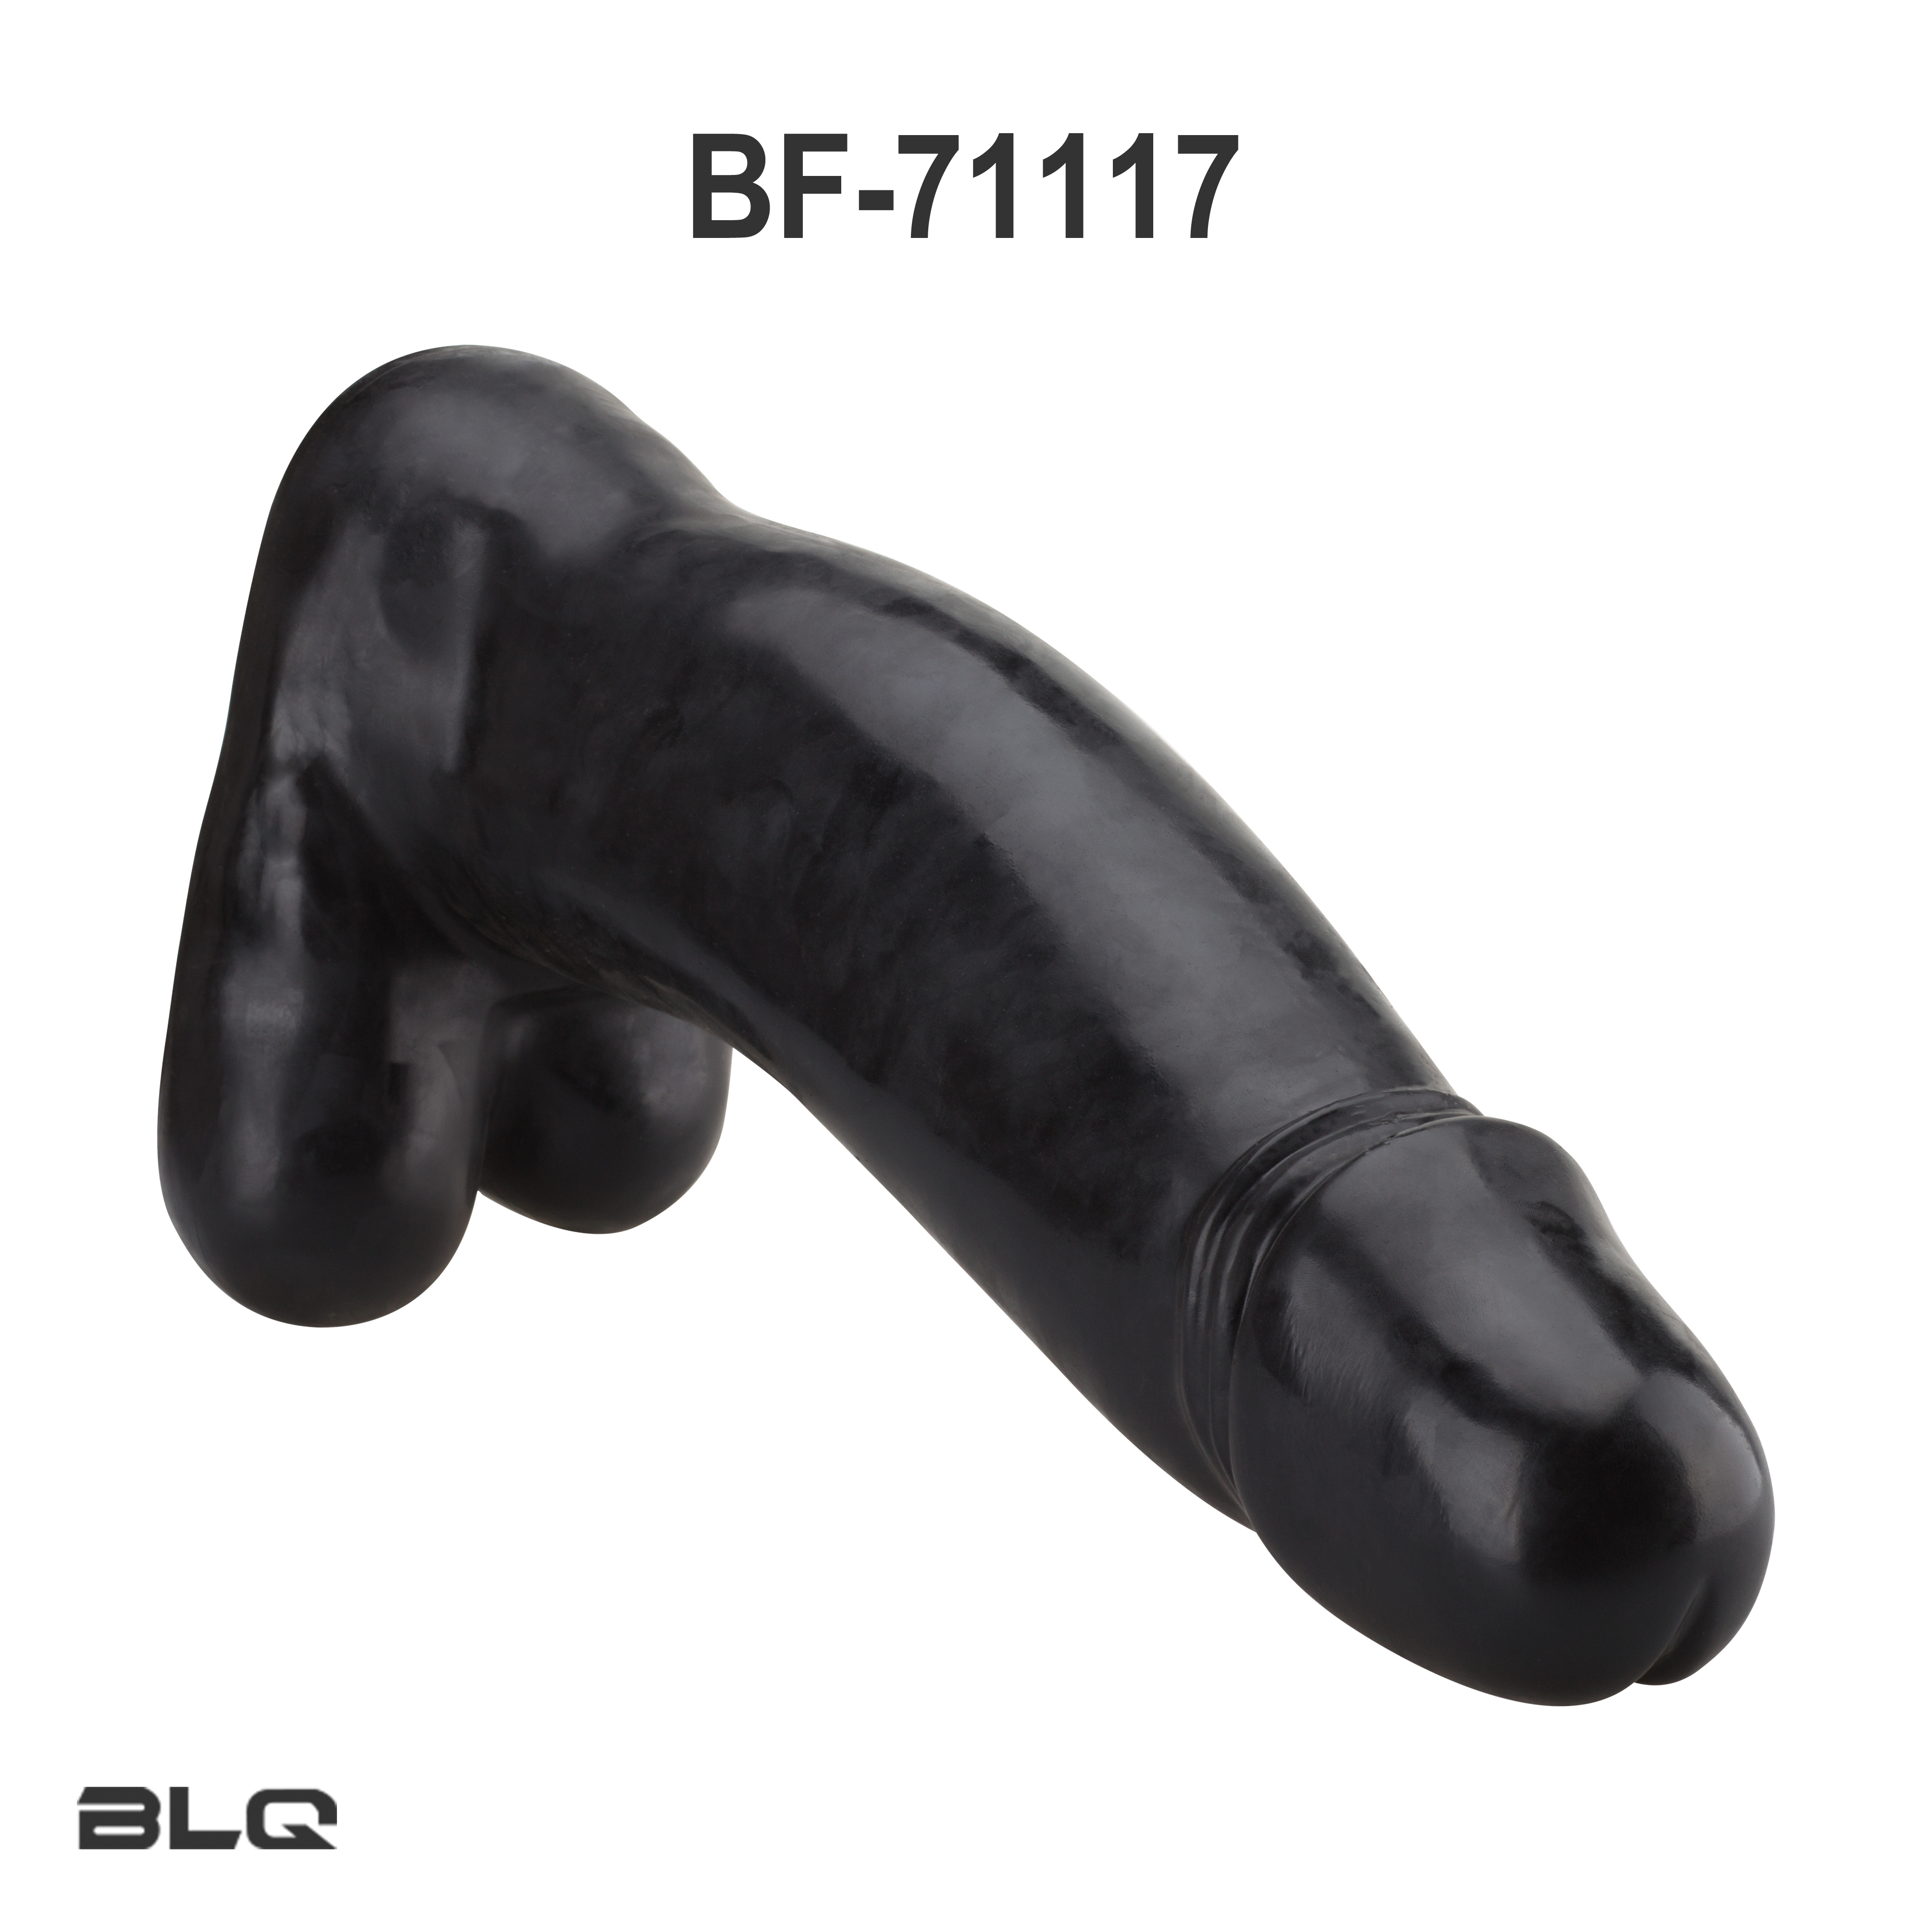 Adult Toys for Extreme King Size Sex Woman Toys Black Dildo